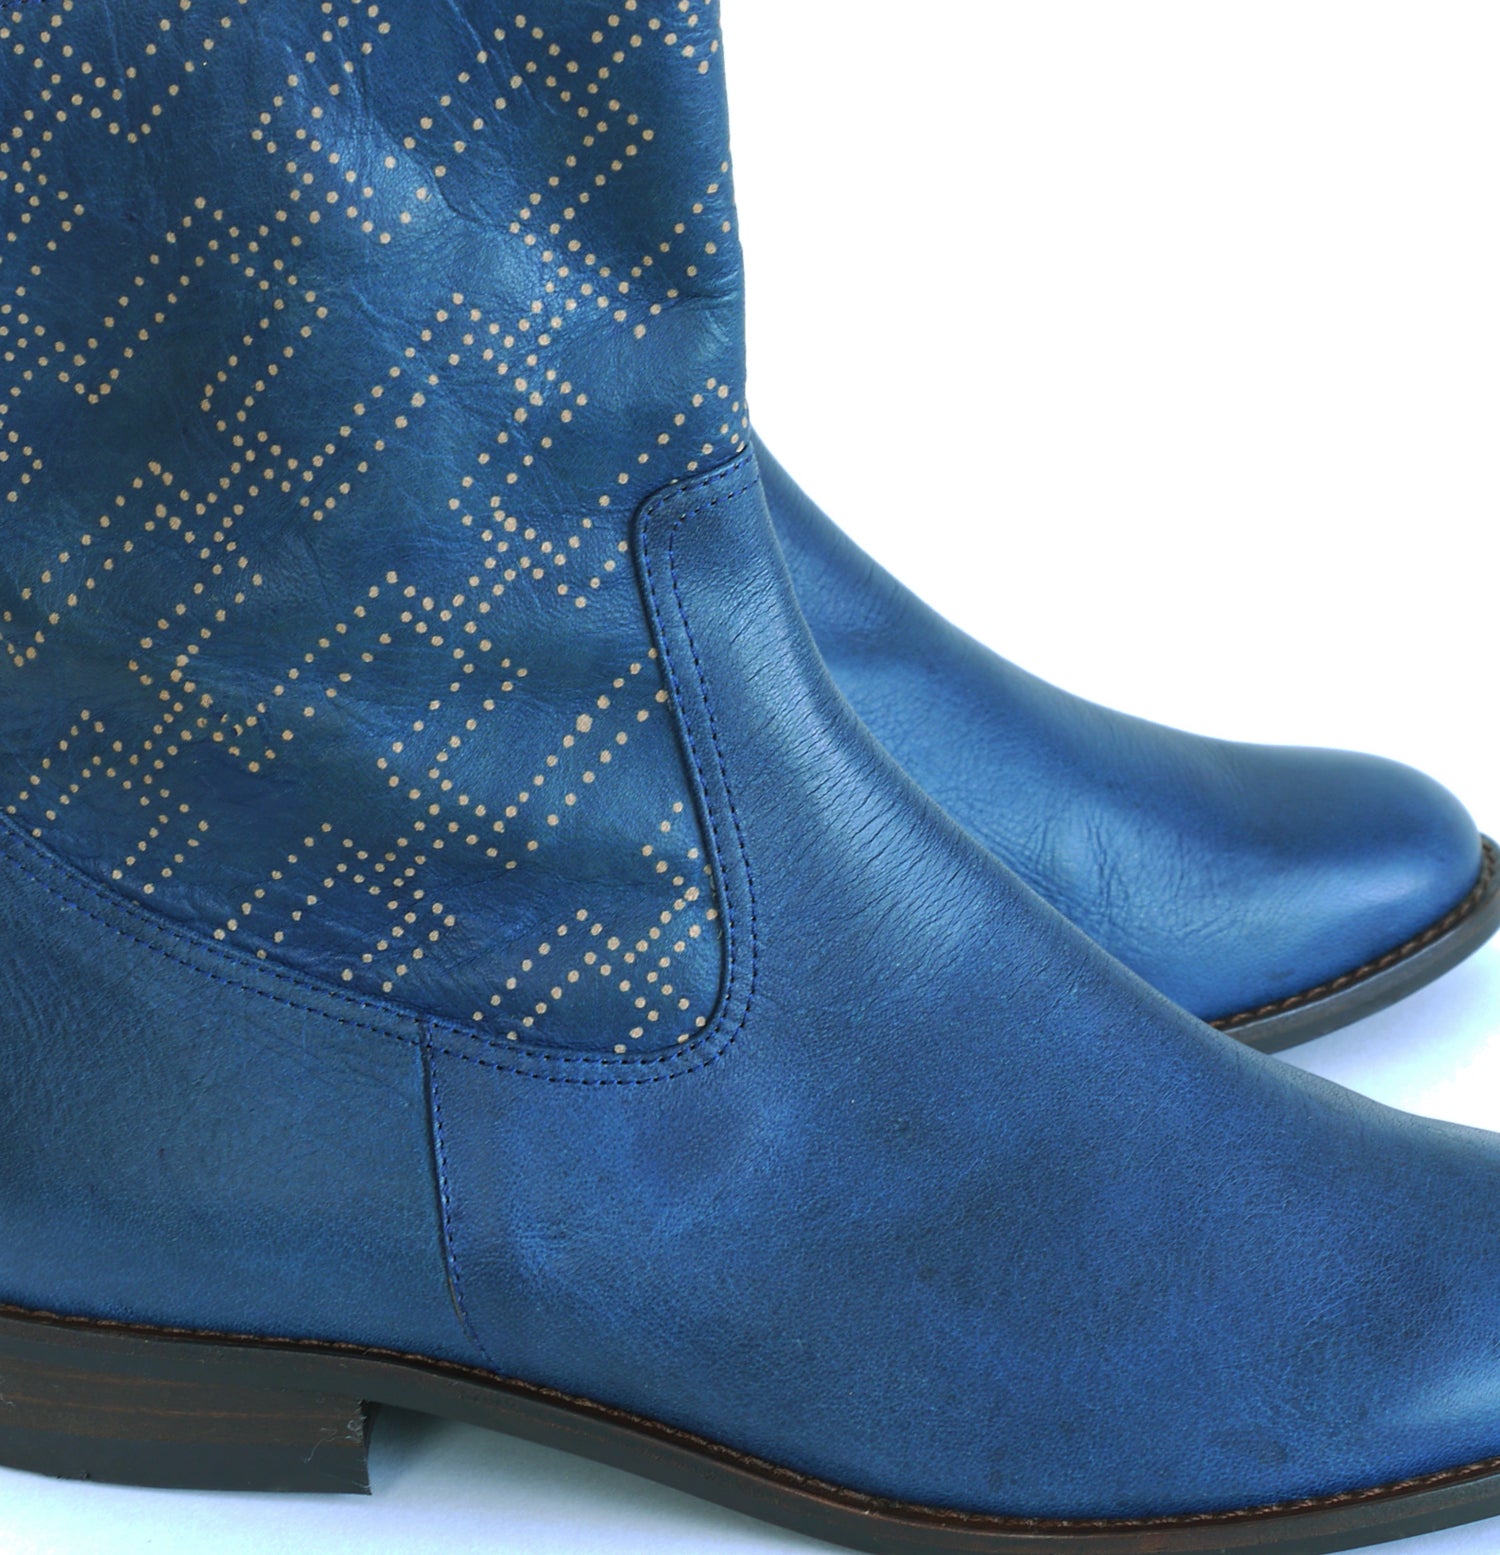 Woman's Ankle Boots.  Indigo dyed leather boots.  SASHIKO